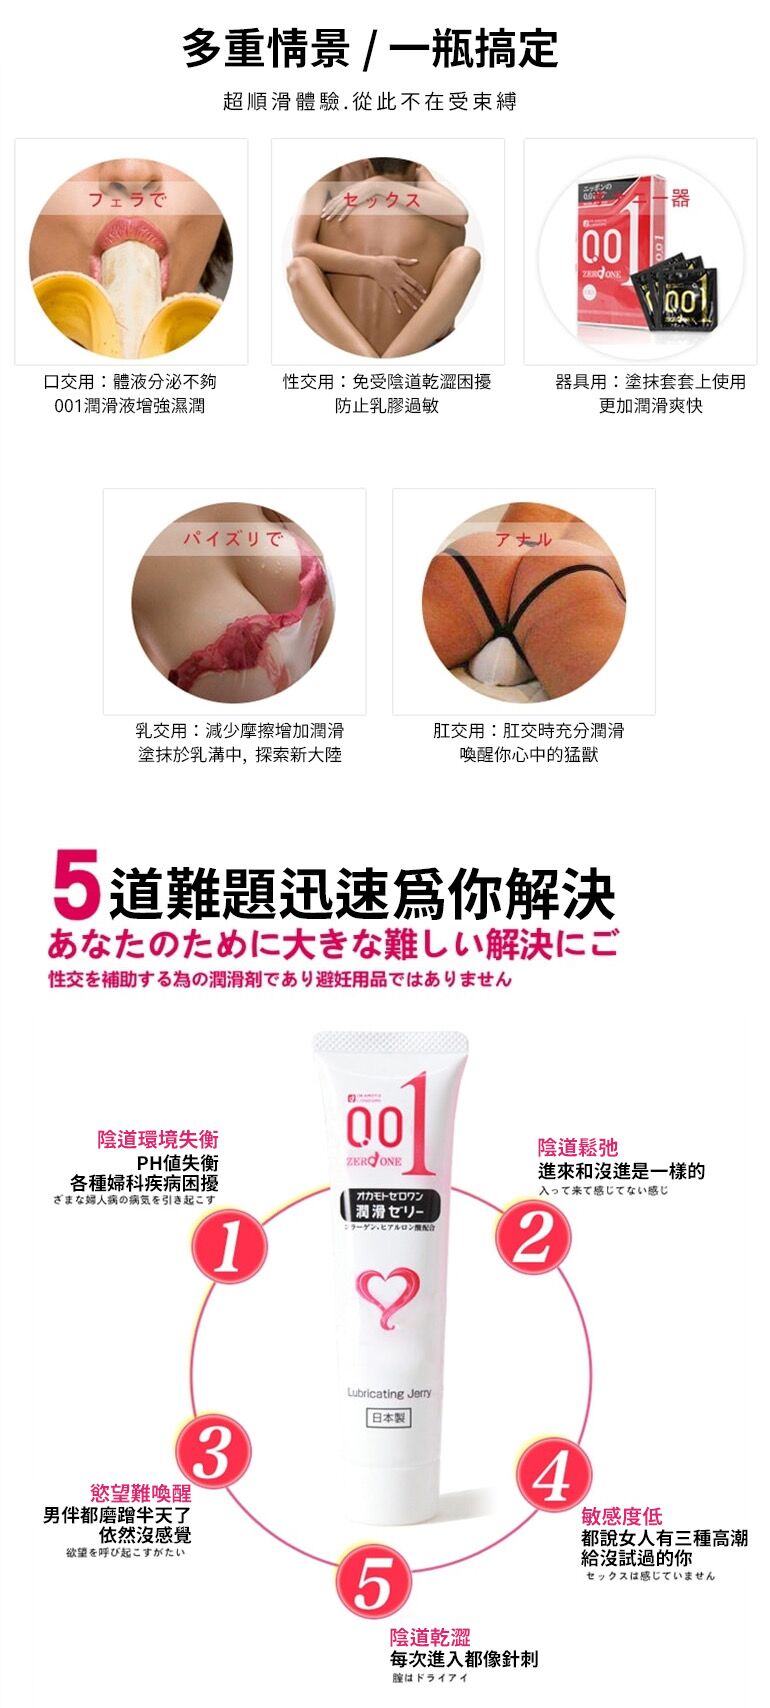 Japan Okamoto 001 Body Lubricant - Adult Loving